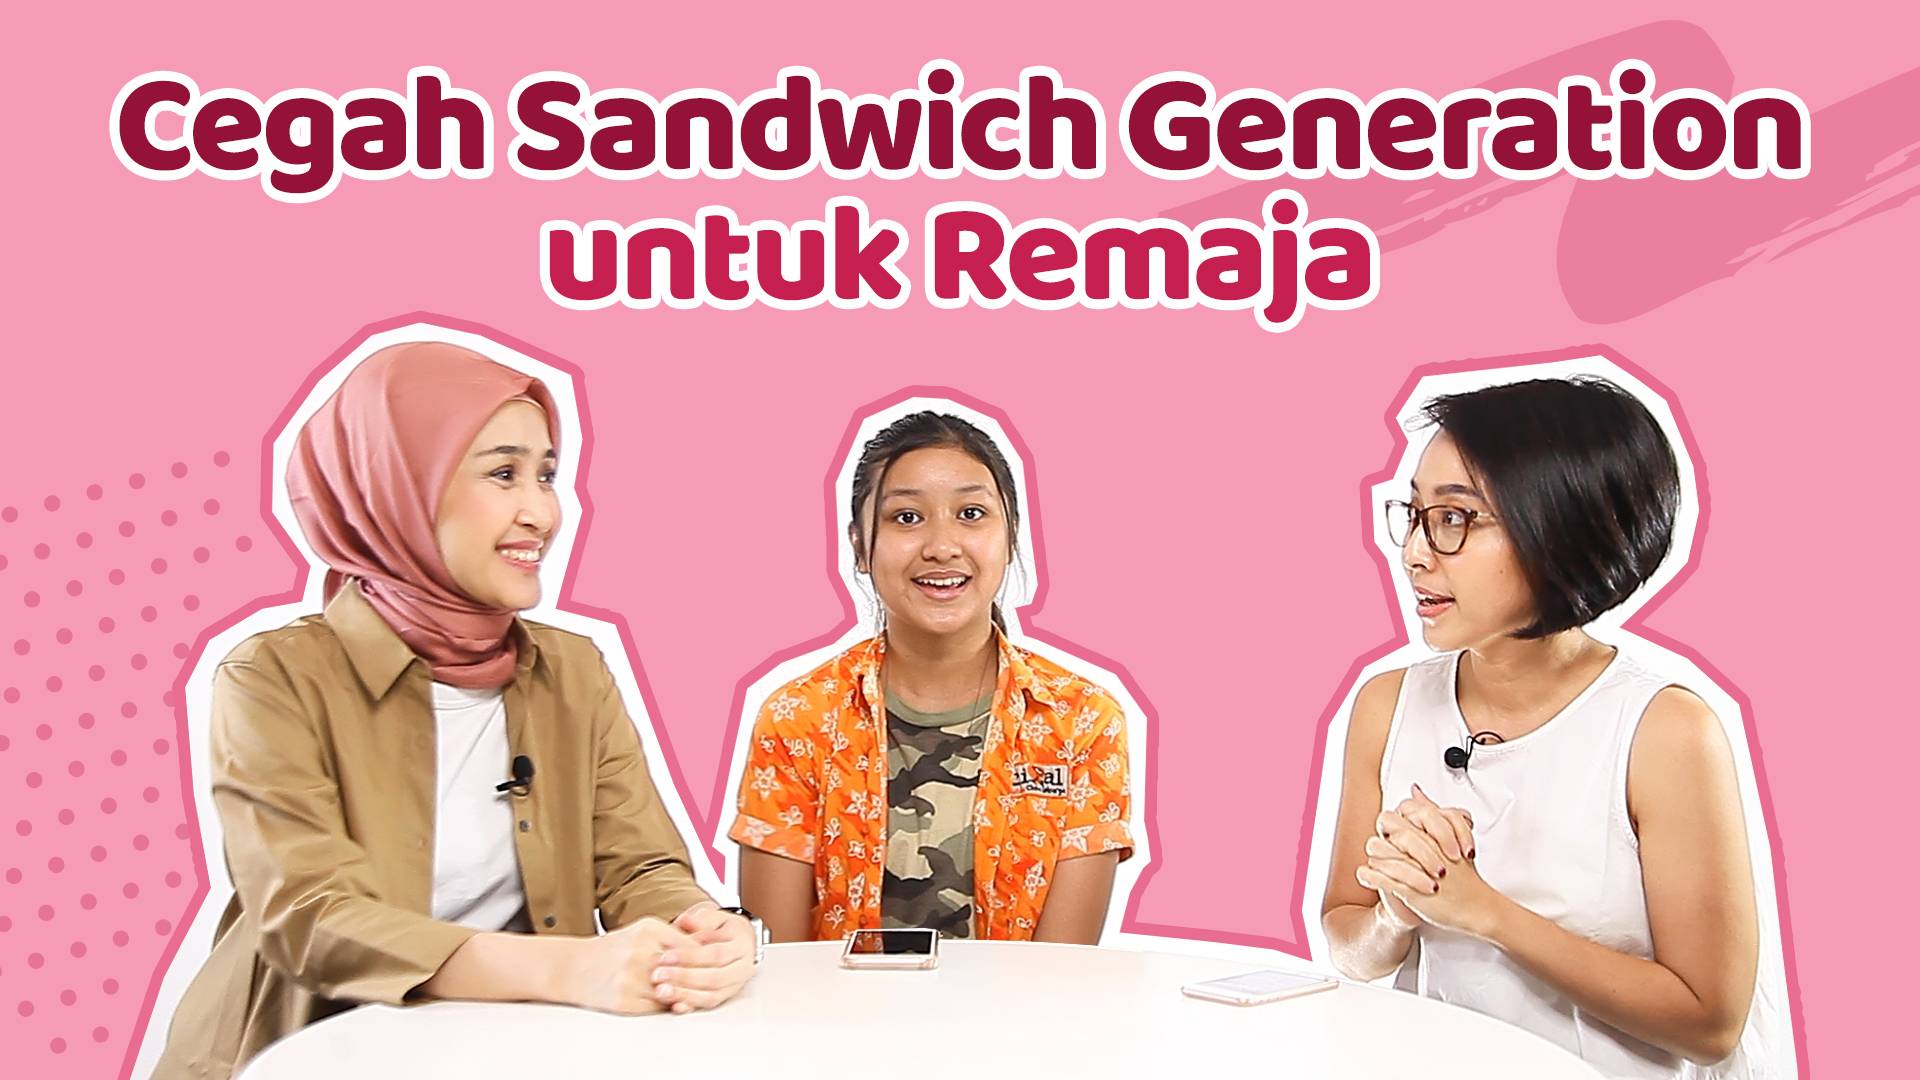 Cegah Sandwich Generation untuk Remaja